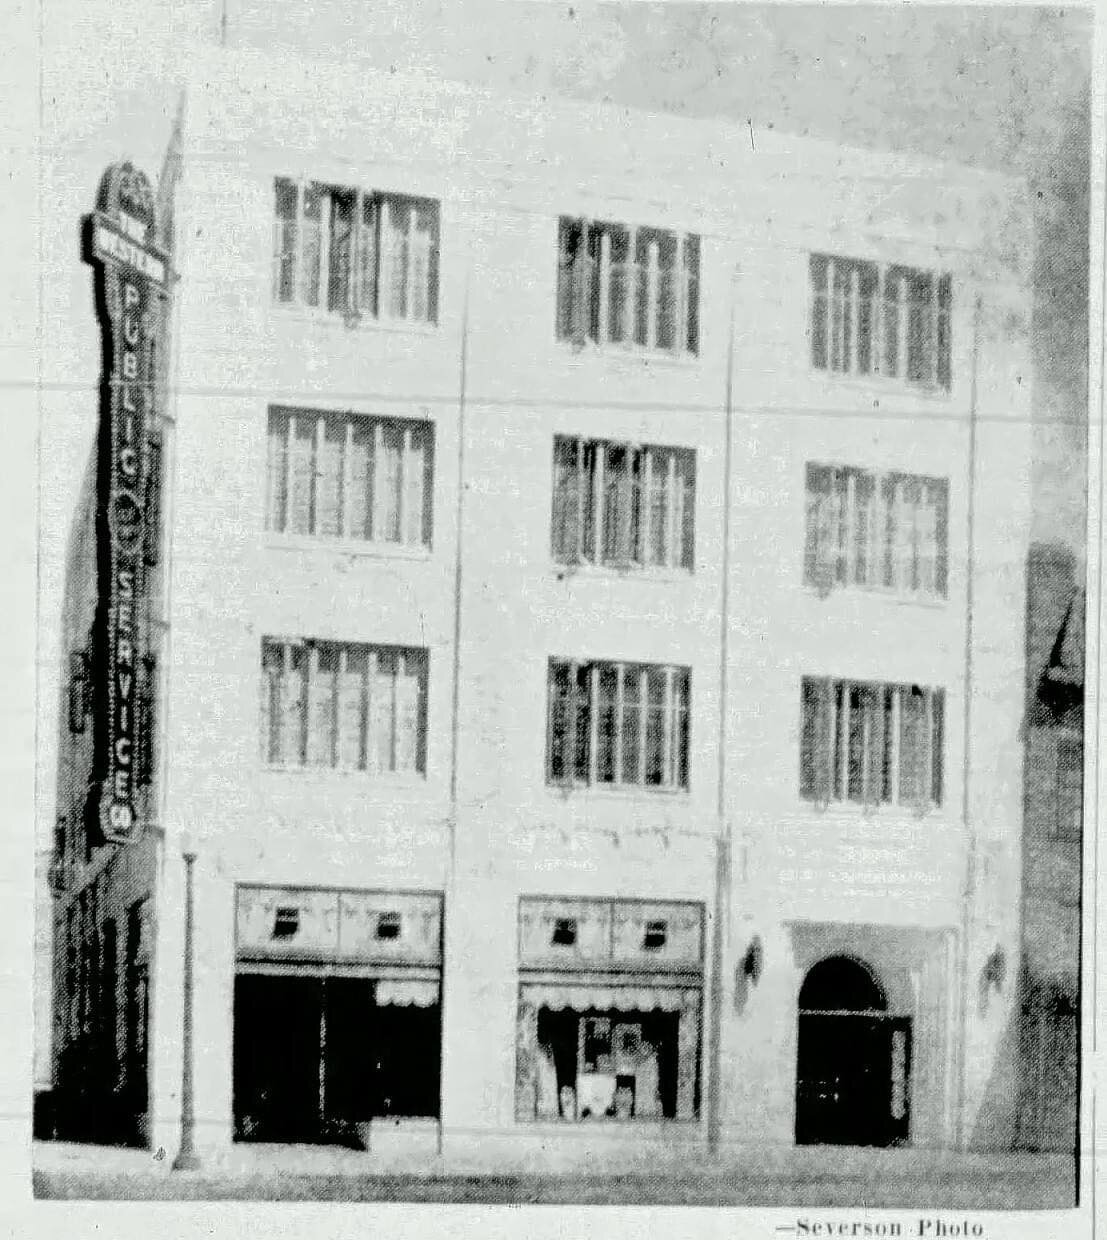 🥂Happy 93rd Birthday, Western Public Service Company Building, est. March 31, 1931!!🥂 #powerhouseonbroadway #historicbuilding #nationalhistoricregistry #downtownscottsbluff #march311931